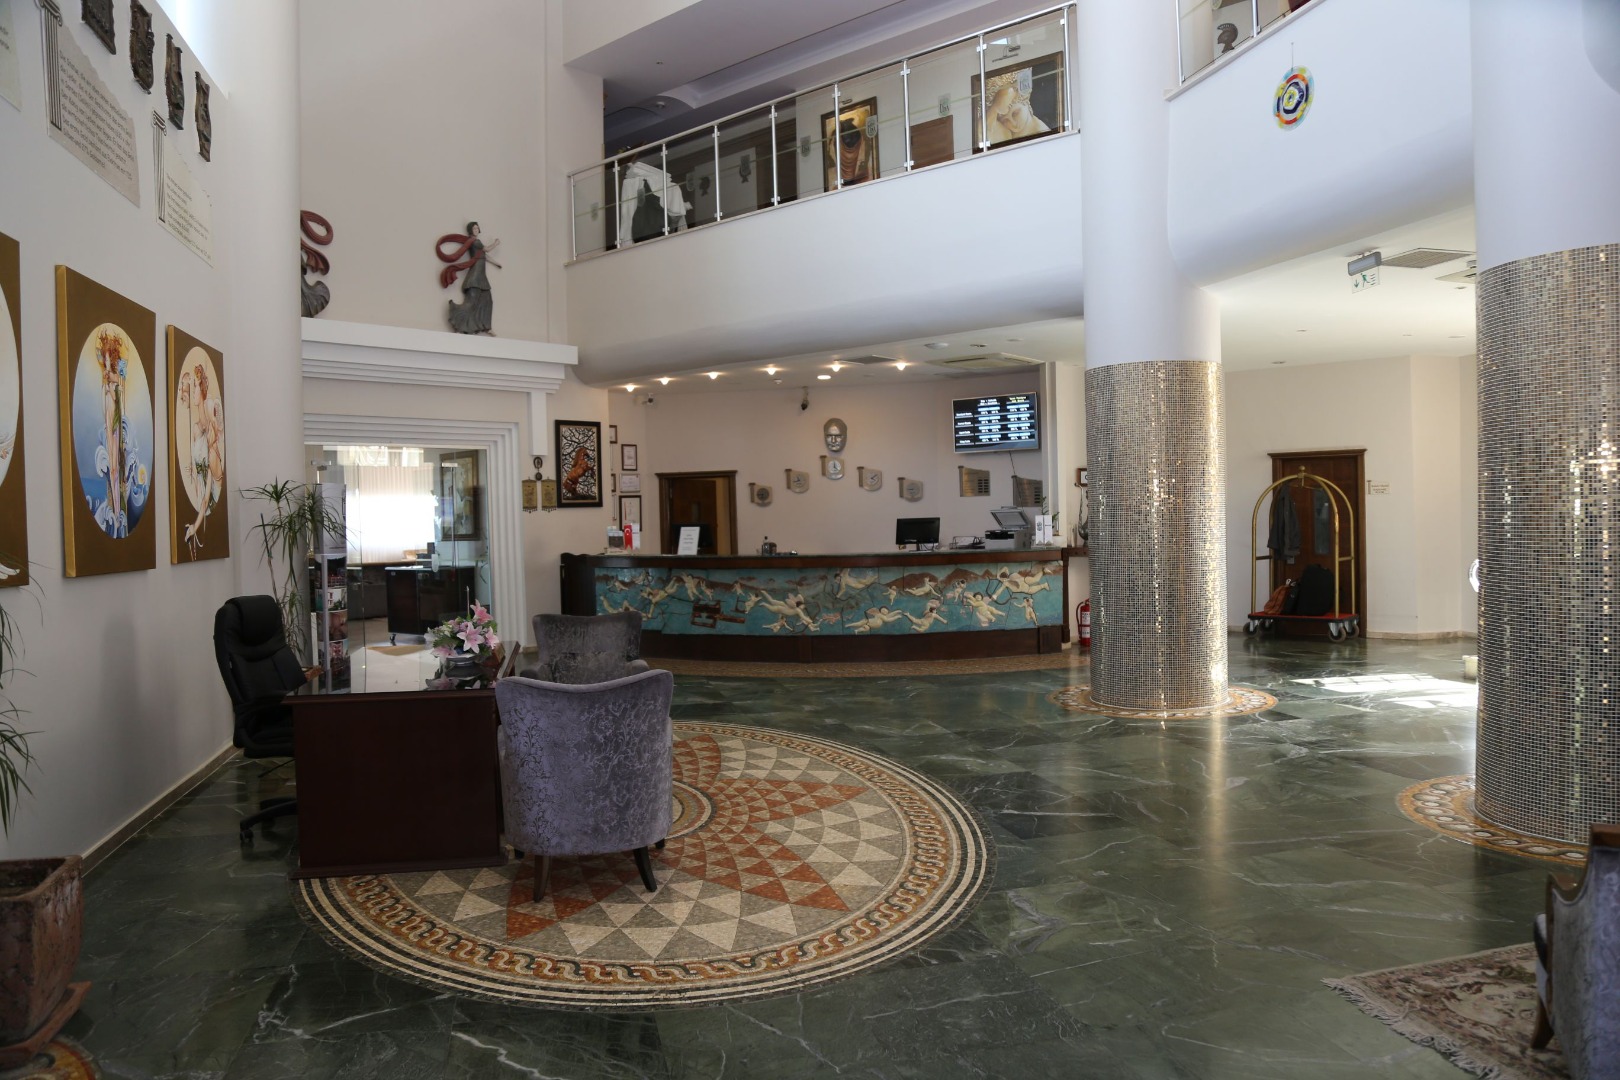 Lidya Sardes Termal Hotel